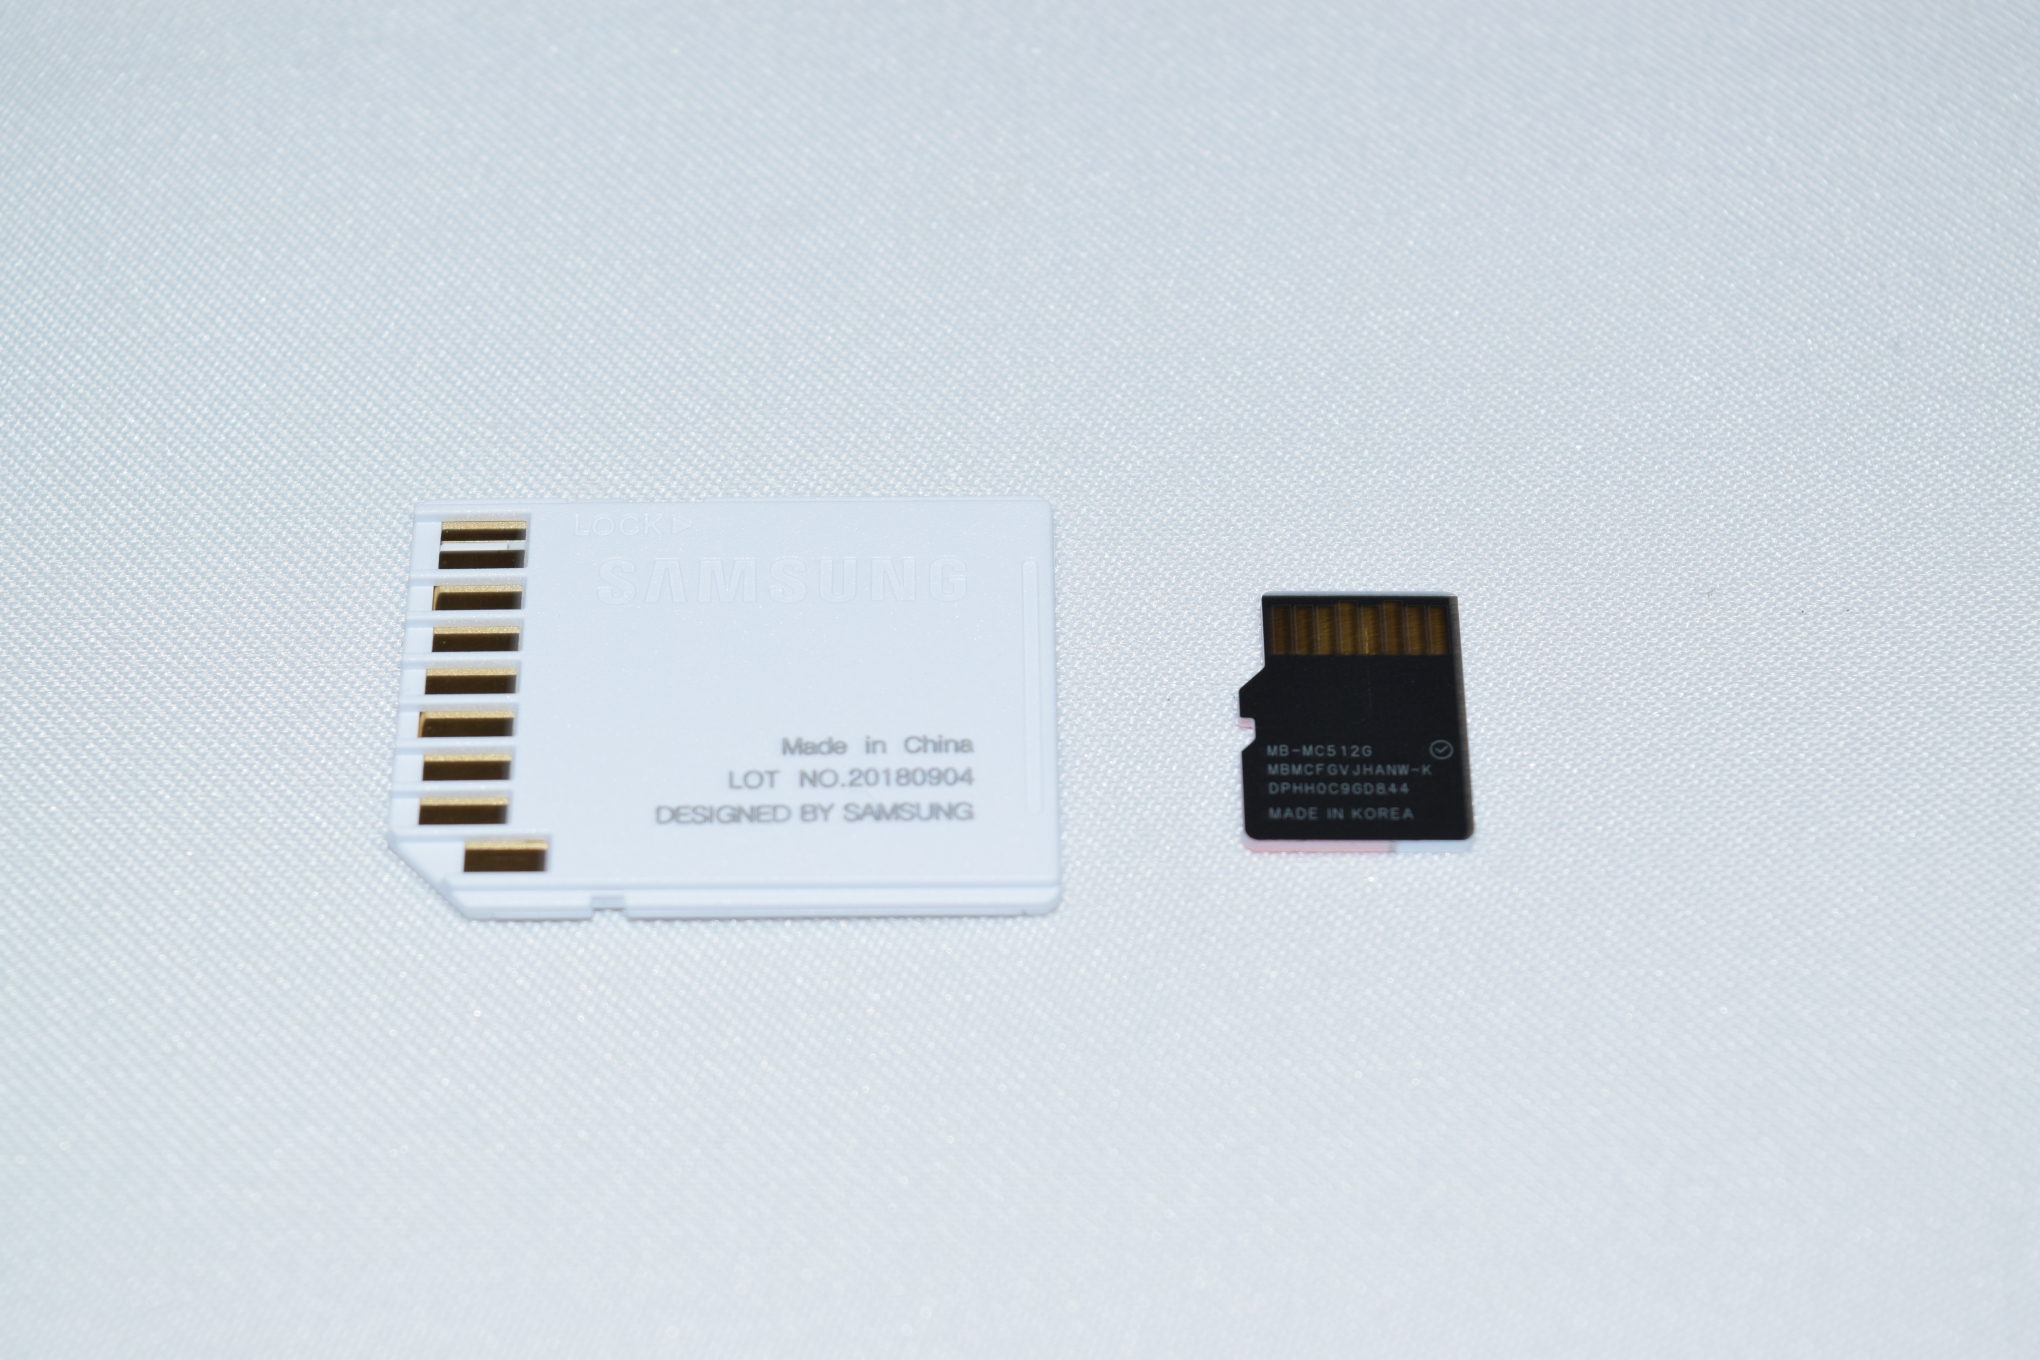 SanDisk Ultra microSDHC UHS-I 512GB - Class 10